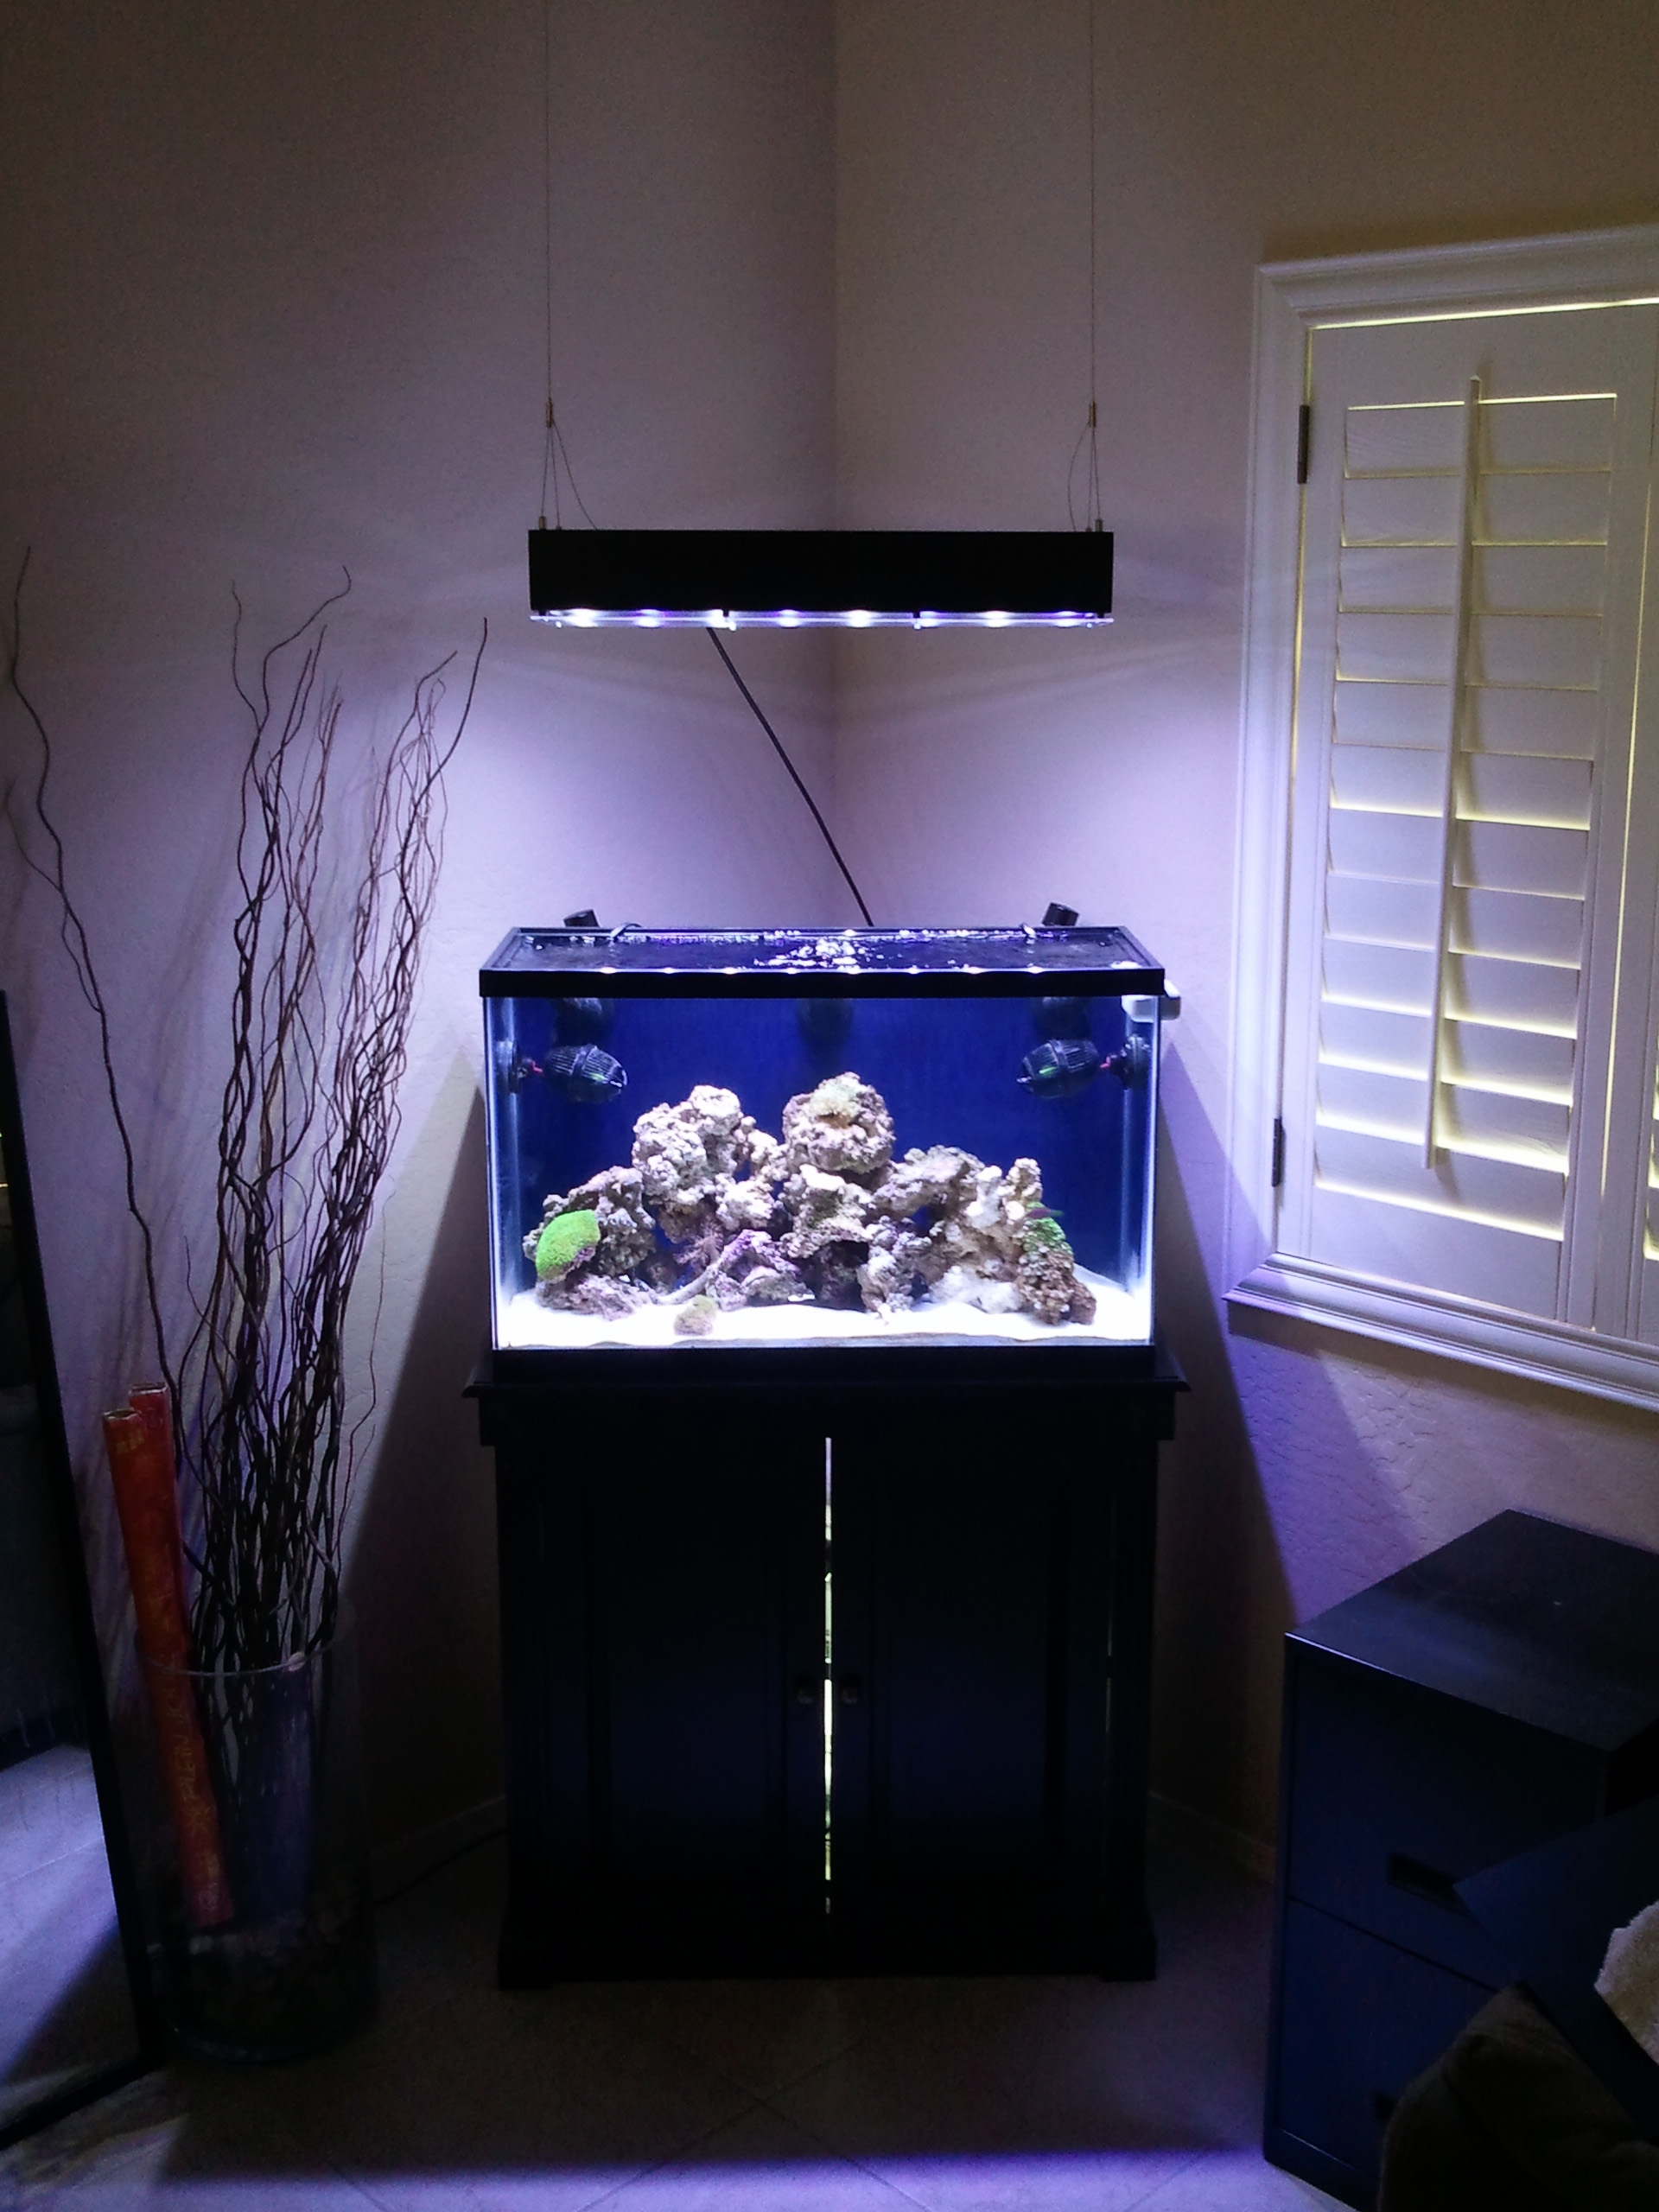 Permalink to Hanging Aquarium Light From Ceiling